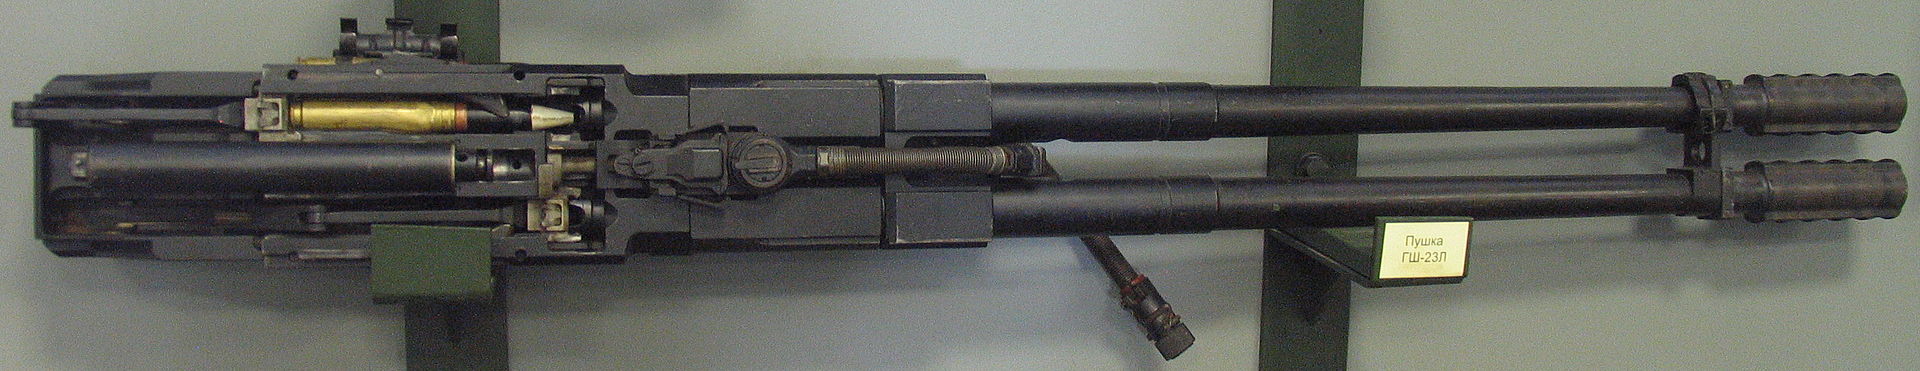 1920px-GSh-23L_cannon.jpg